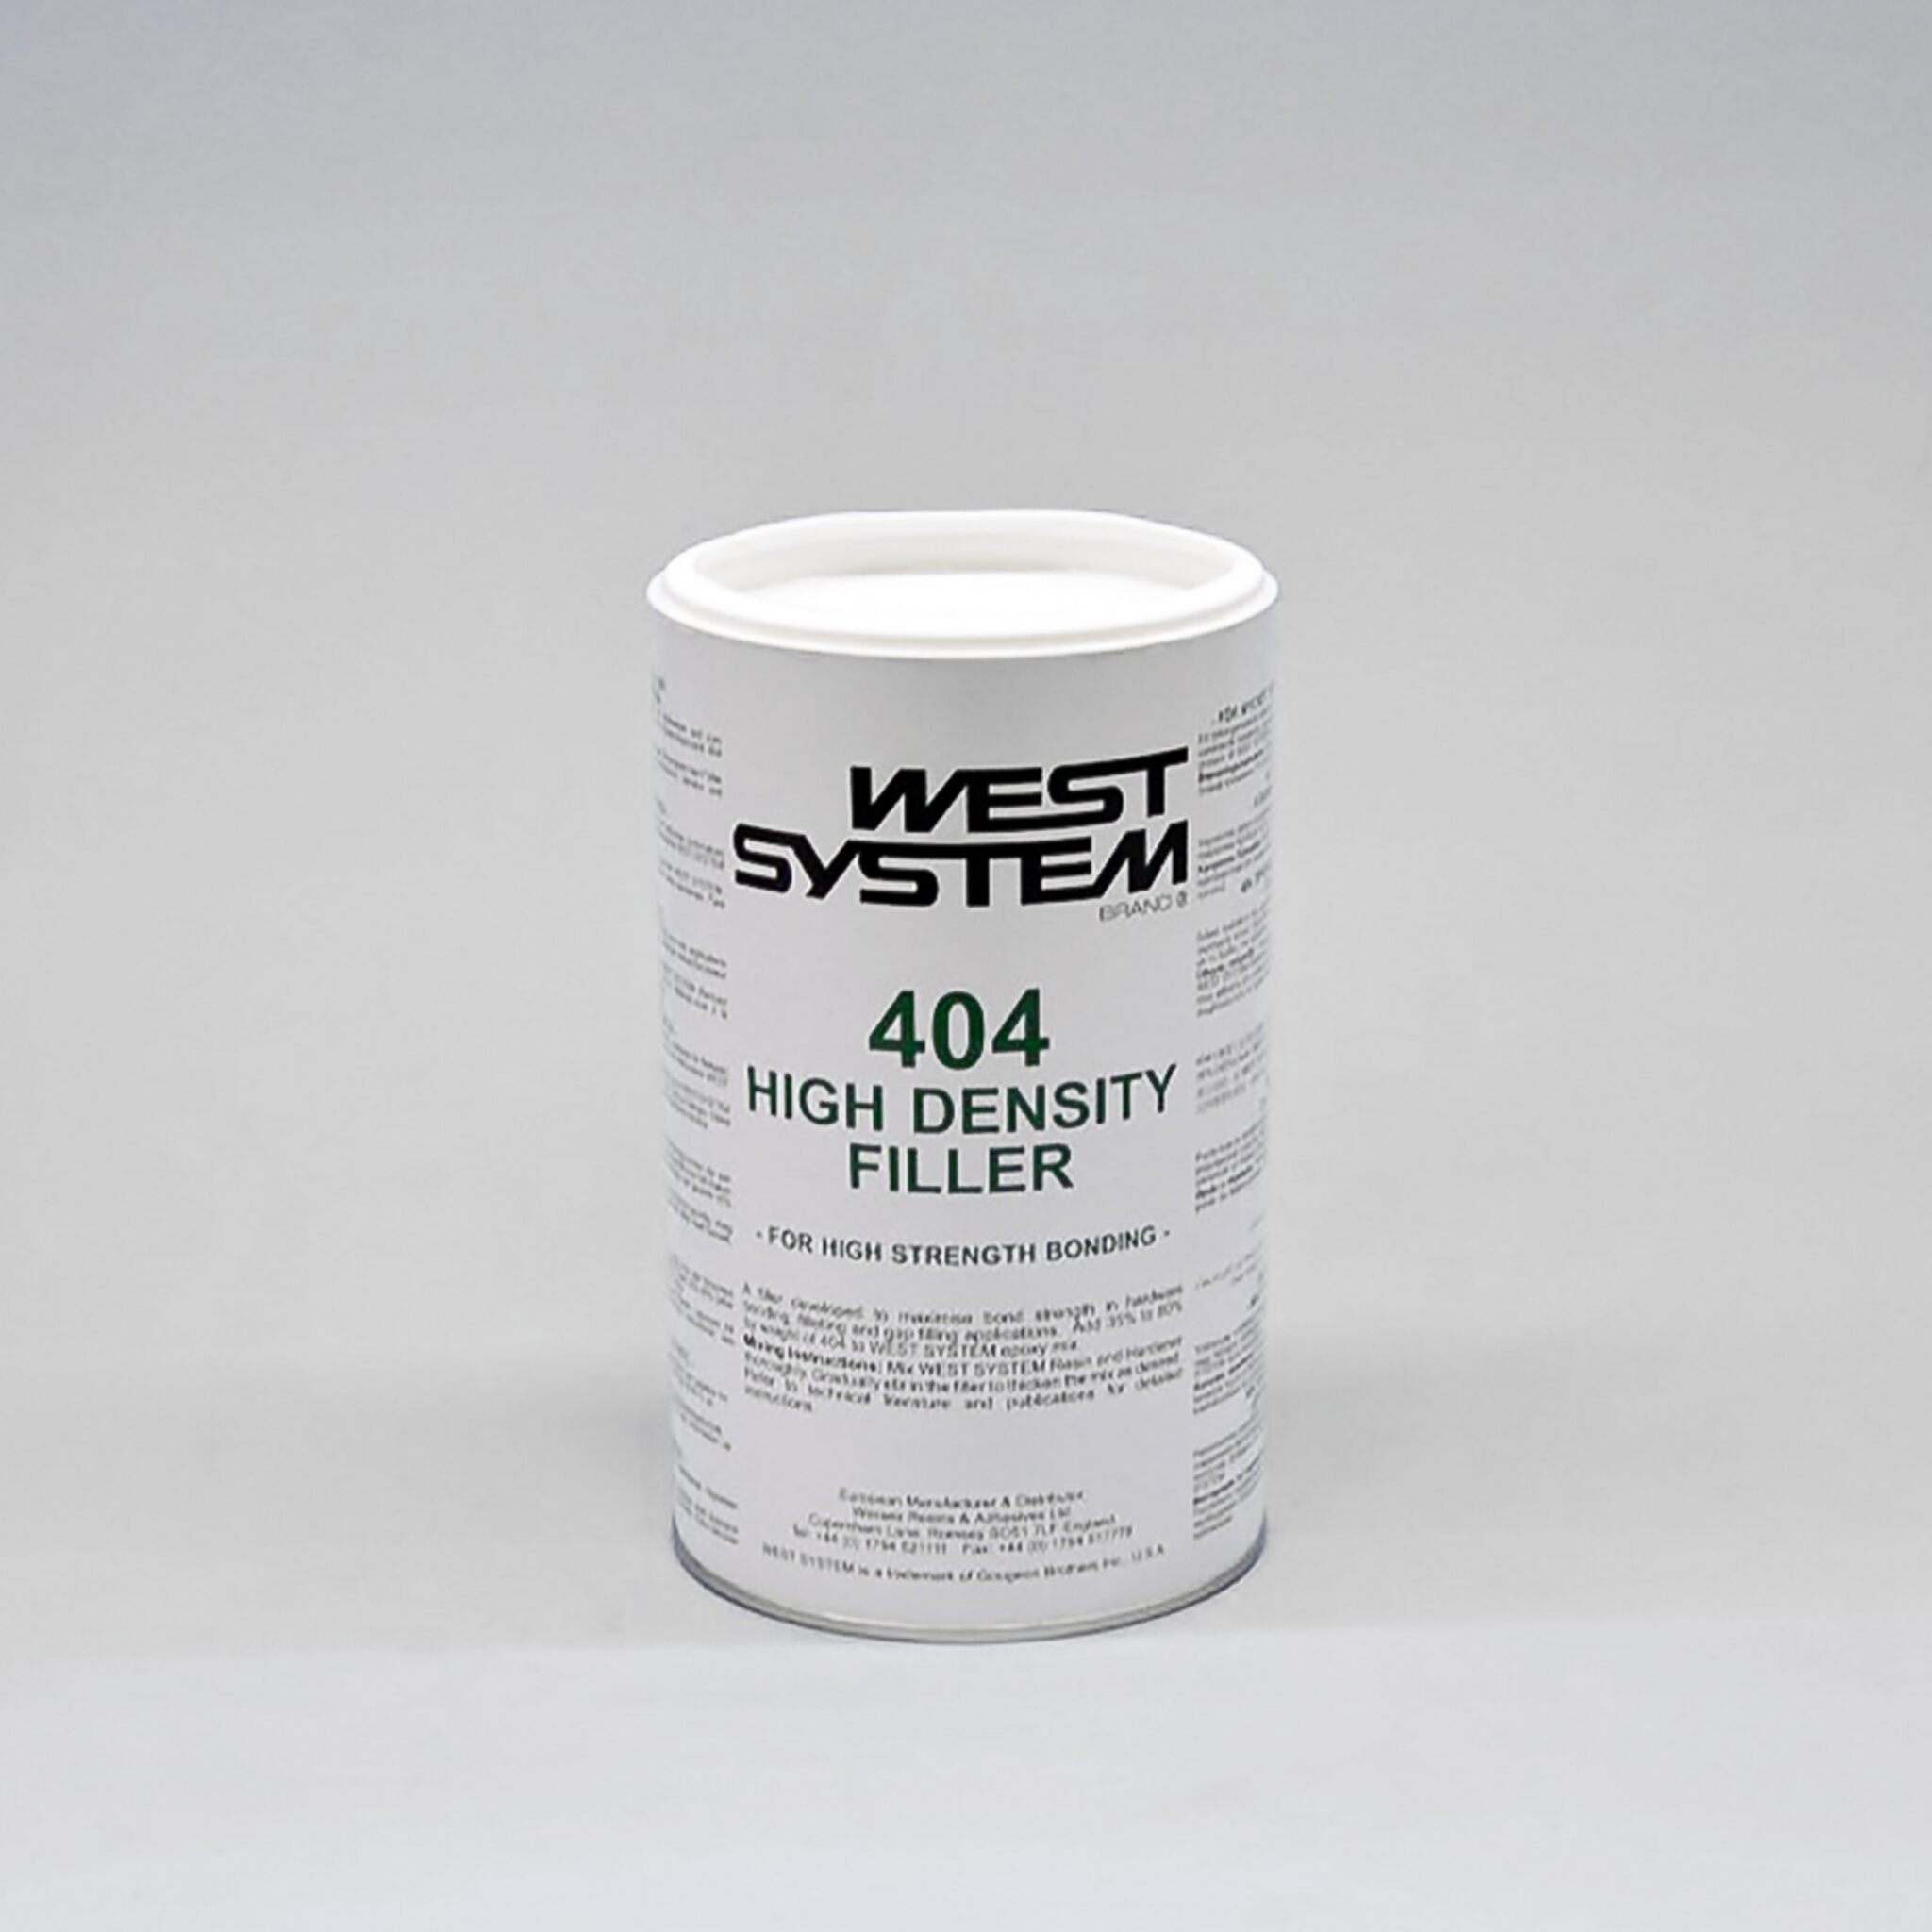 Füller 404 - High Density Filler